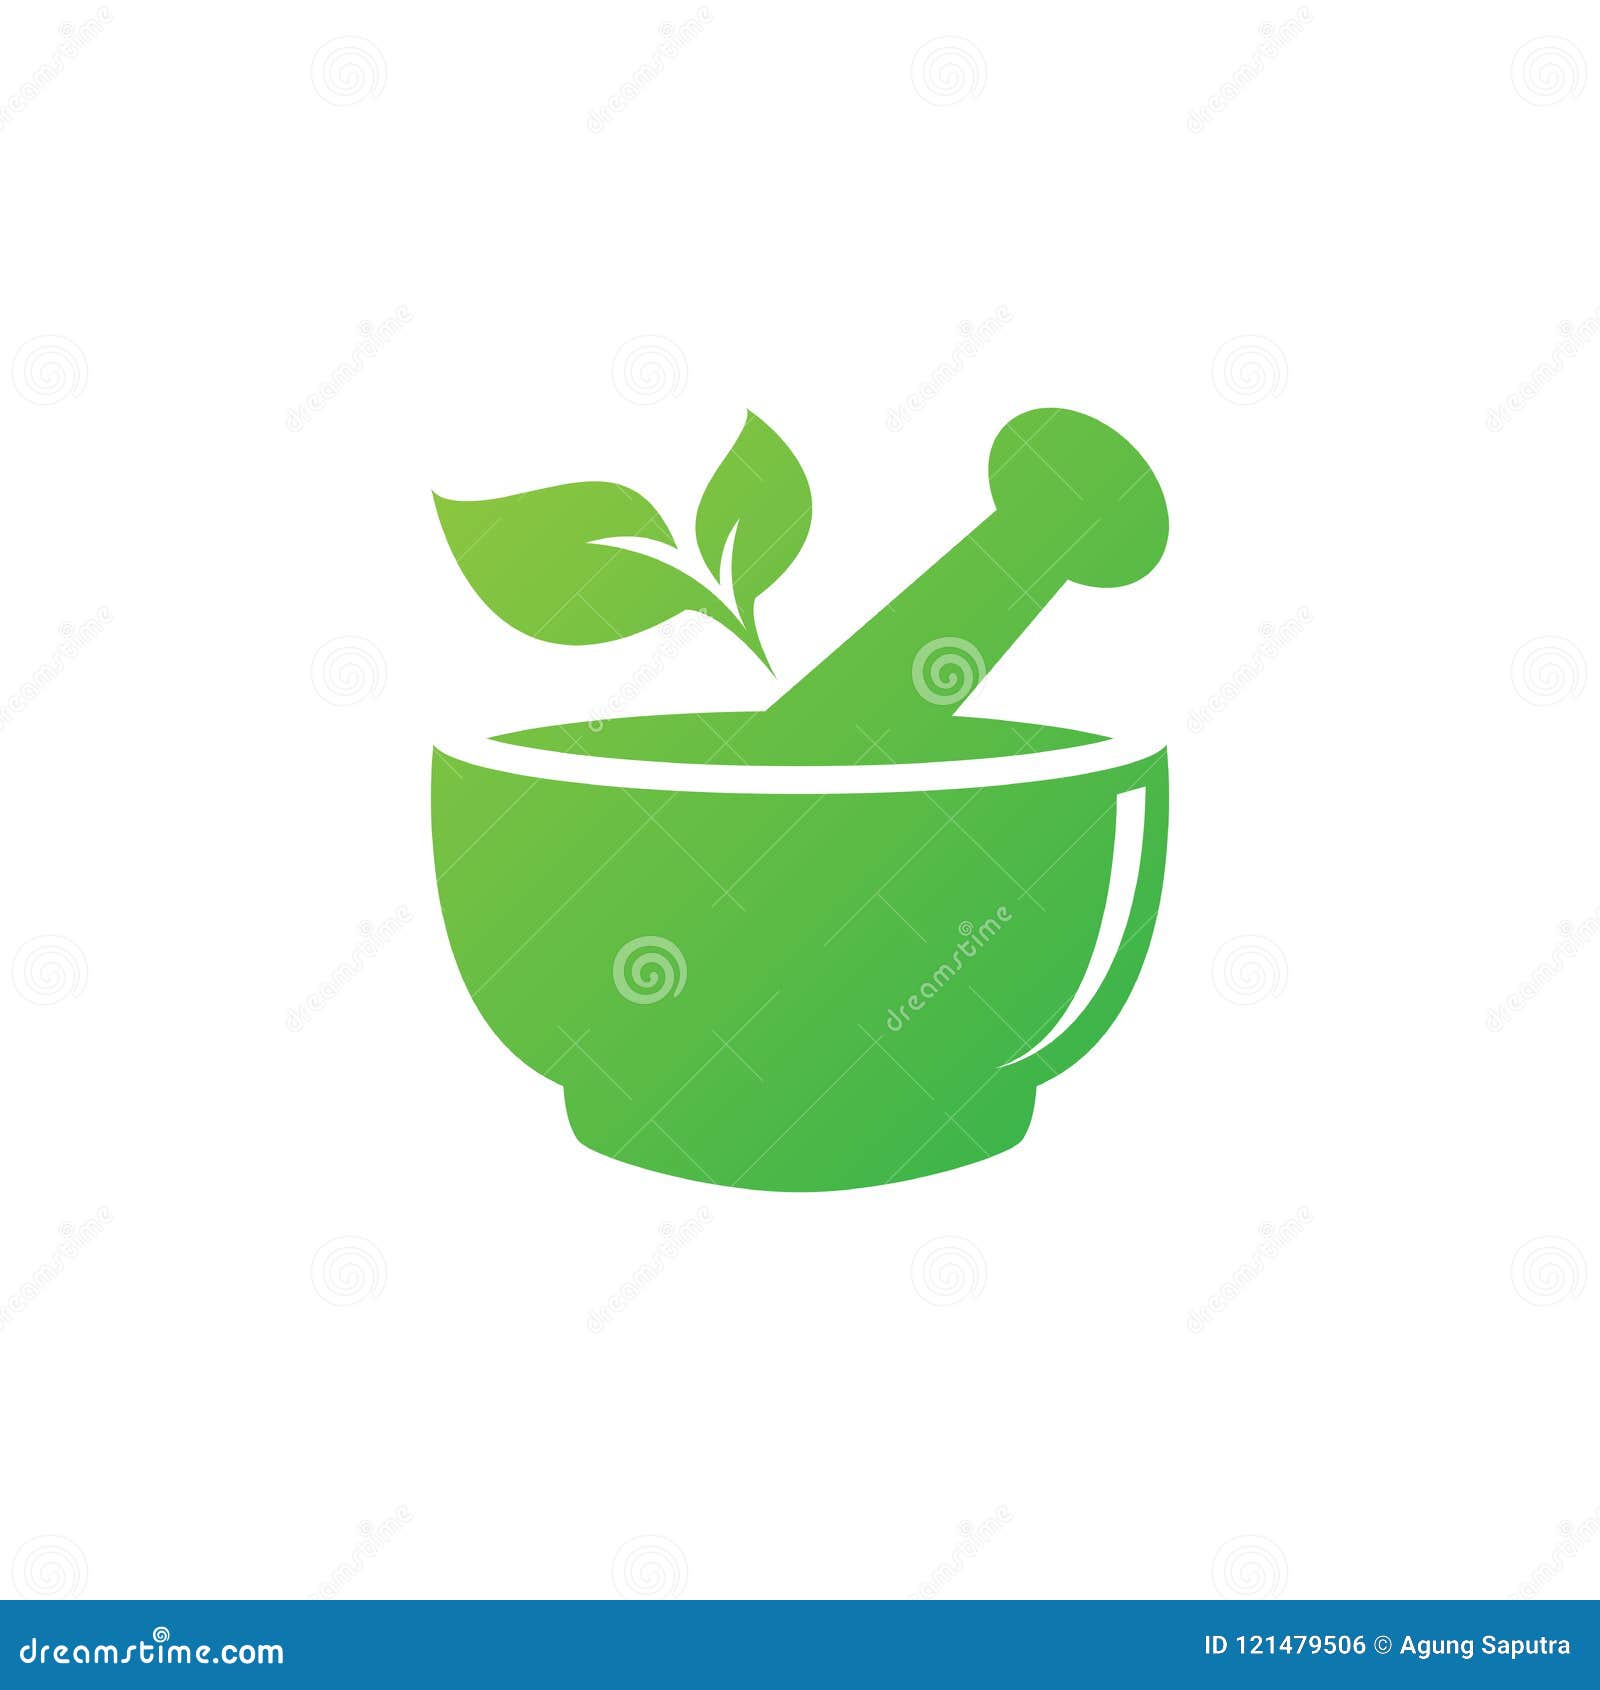 Mortar And Pestle Pharmacy Nature Herbal Health Logo Design Vector Template  Stock Vector - Illustration of element, hospital: 121479434